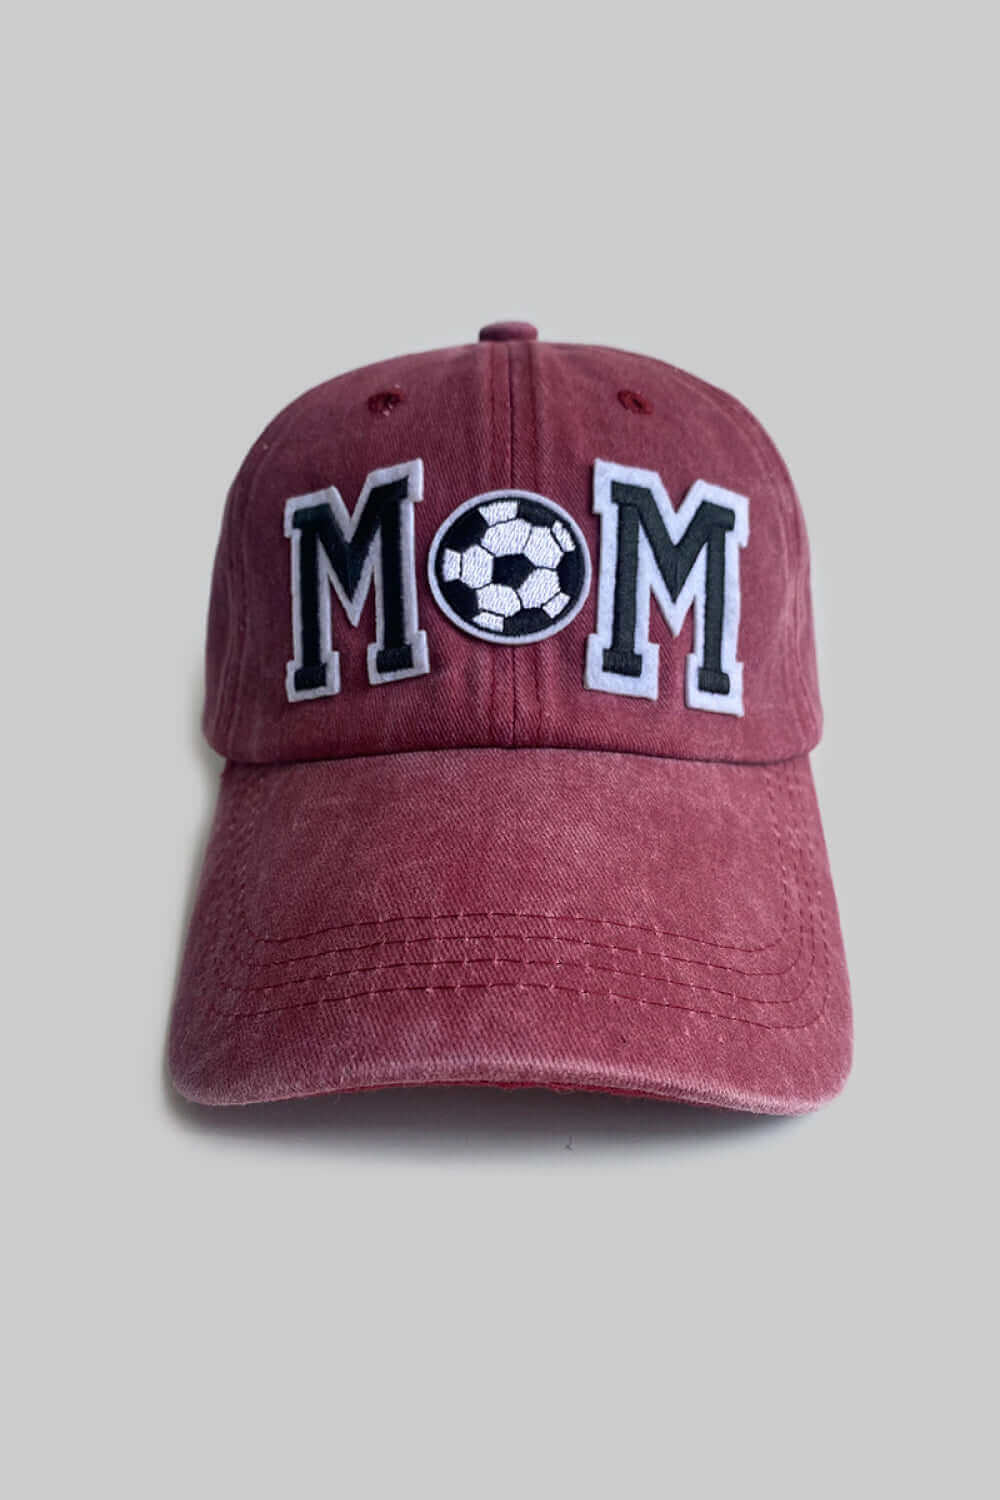 Mom Baseball Cap Stylish Comfortable Cotton Hat - Samslivos